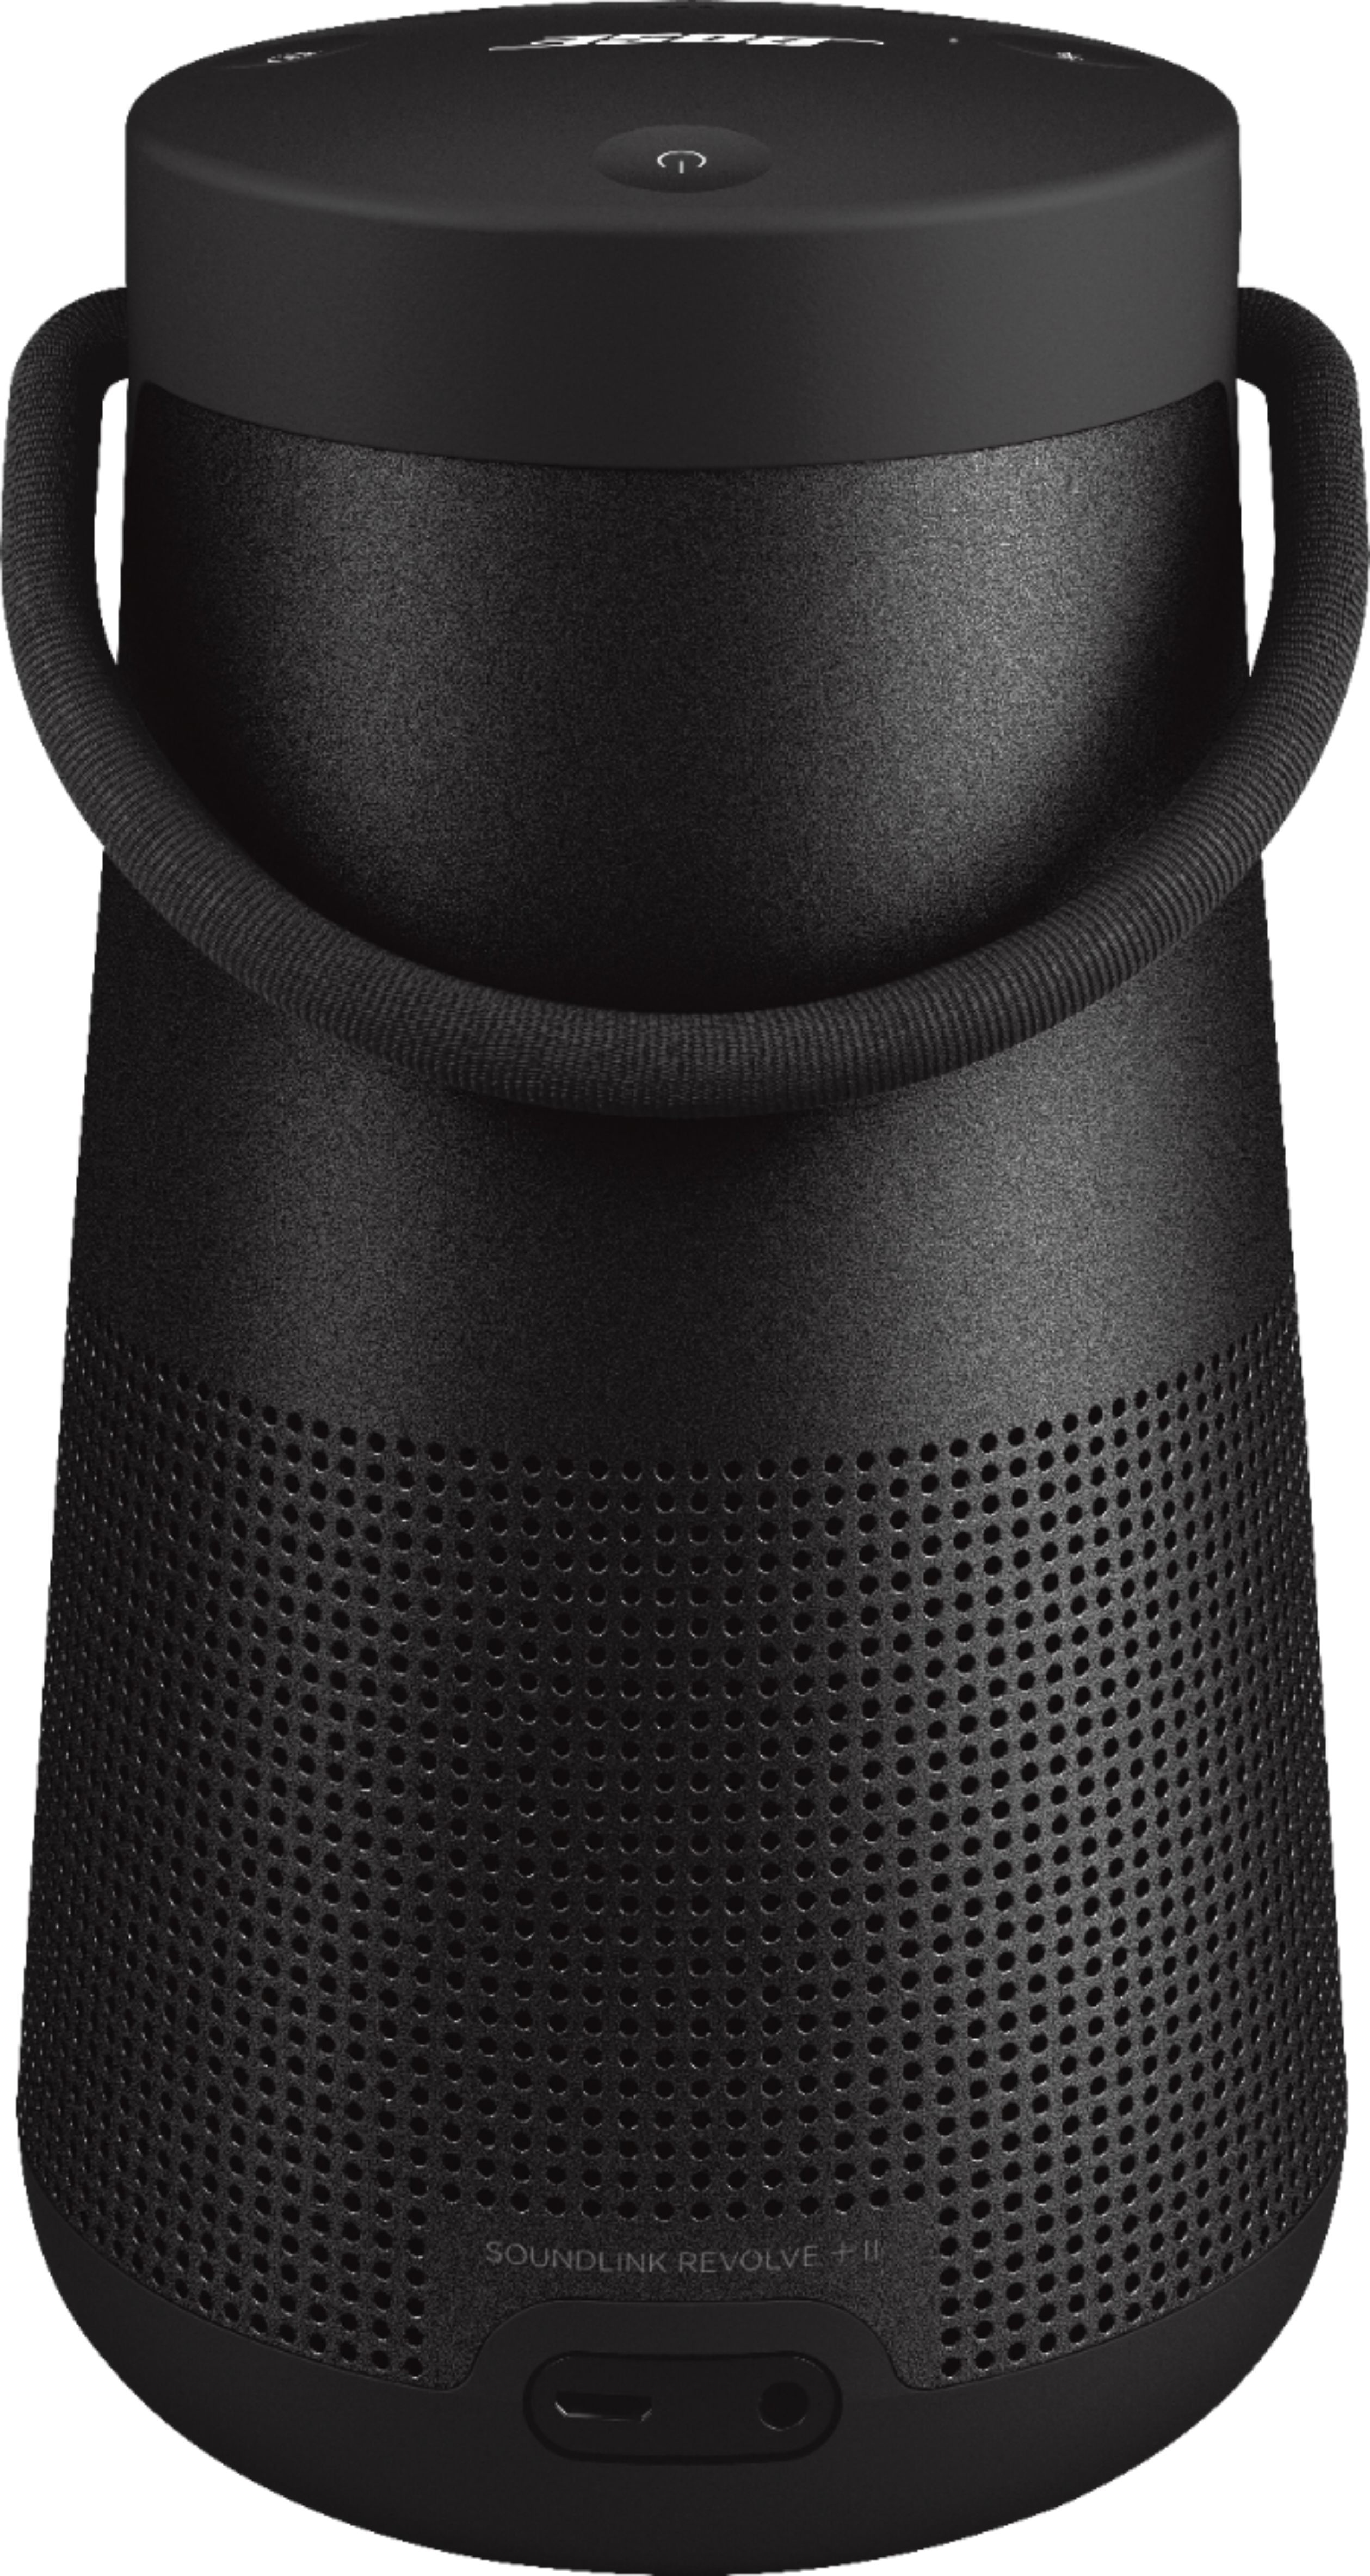 Bose Bluetooth Speaker Triple Black 858366-1110 - Best Buy